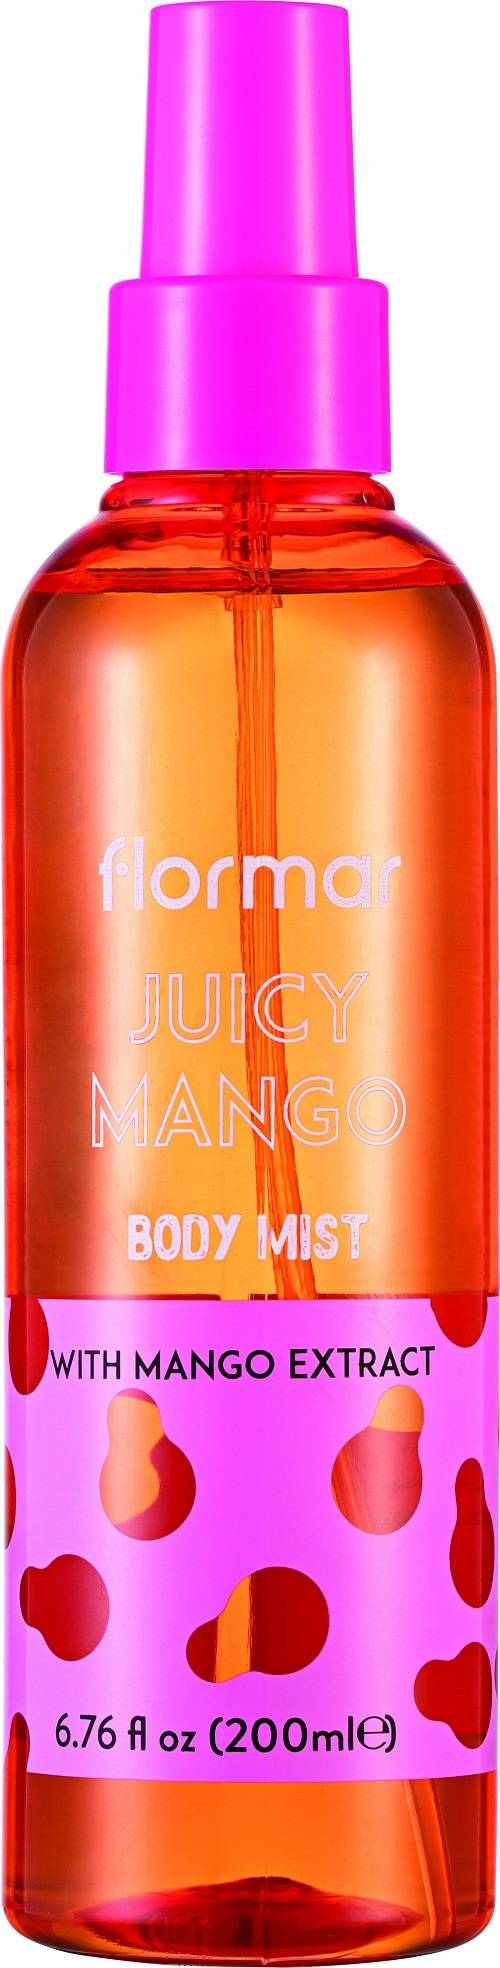 Juicy Mango Body Mist